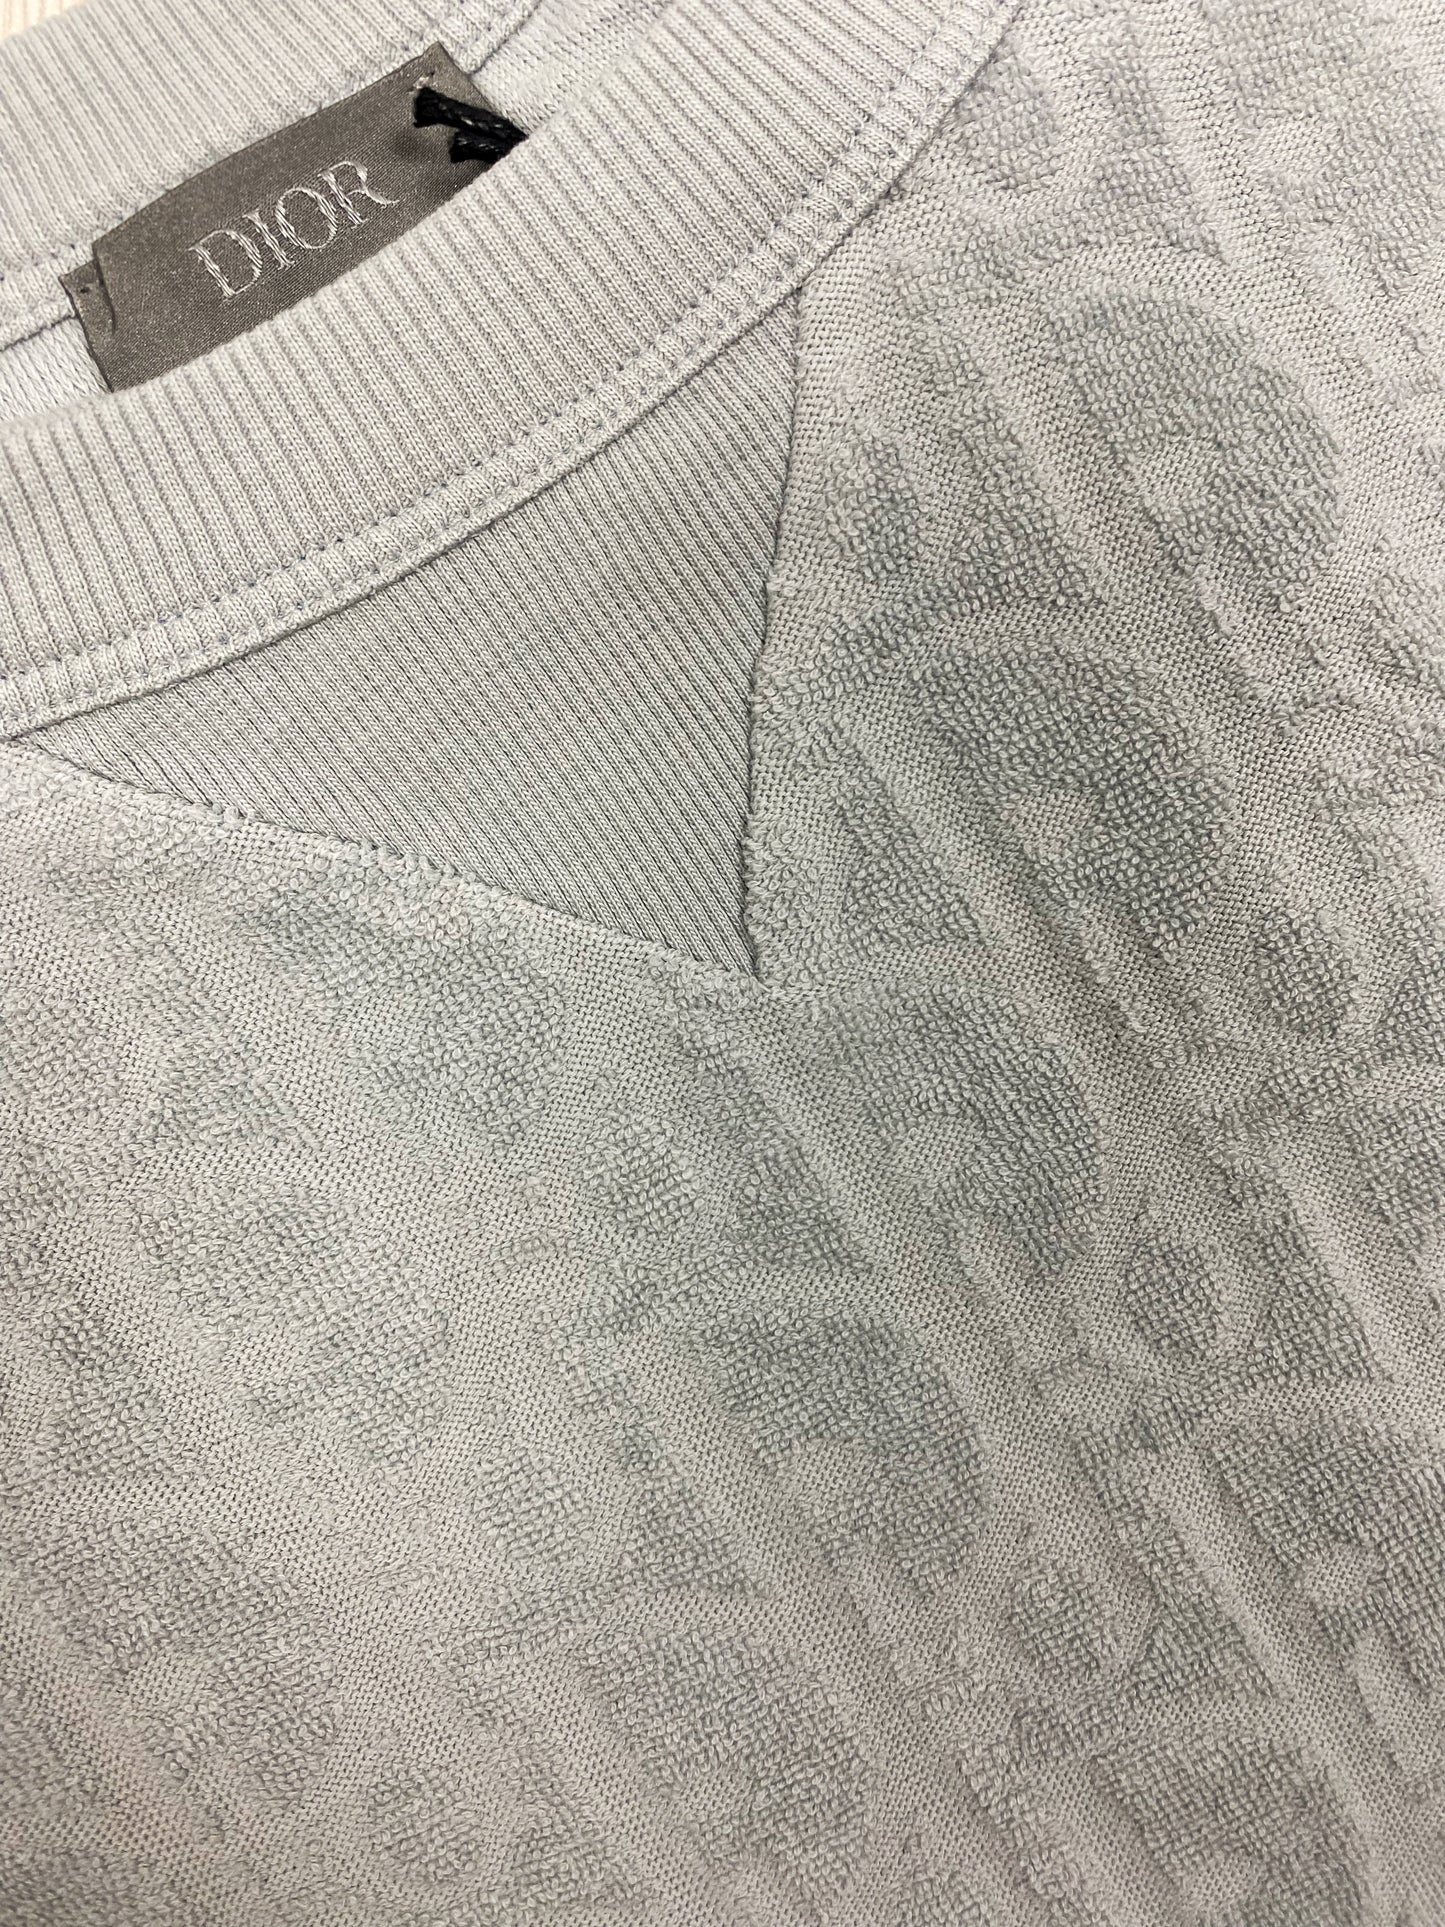 T-shirt Dior oblique gris clair coupe relax